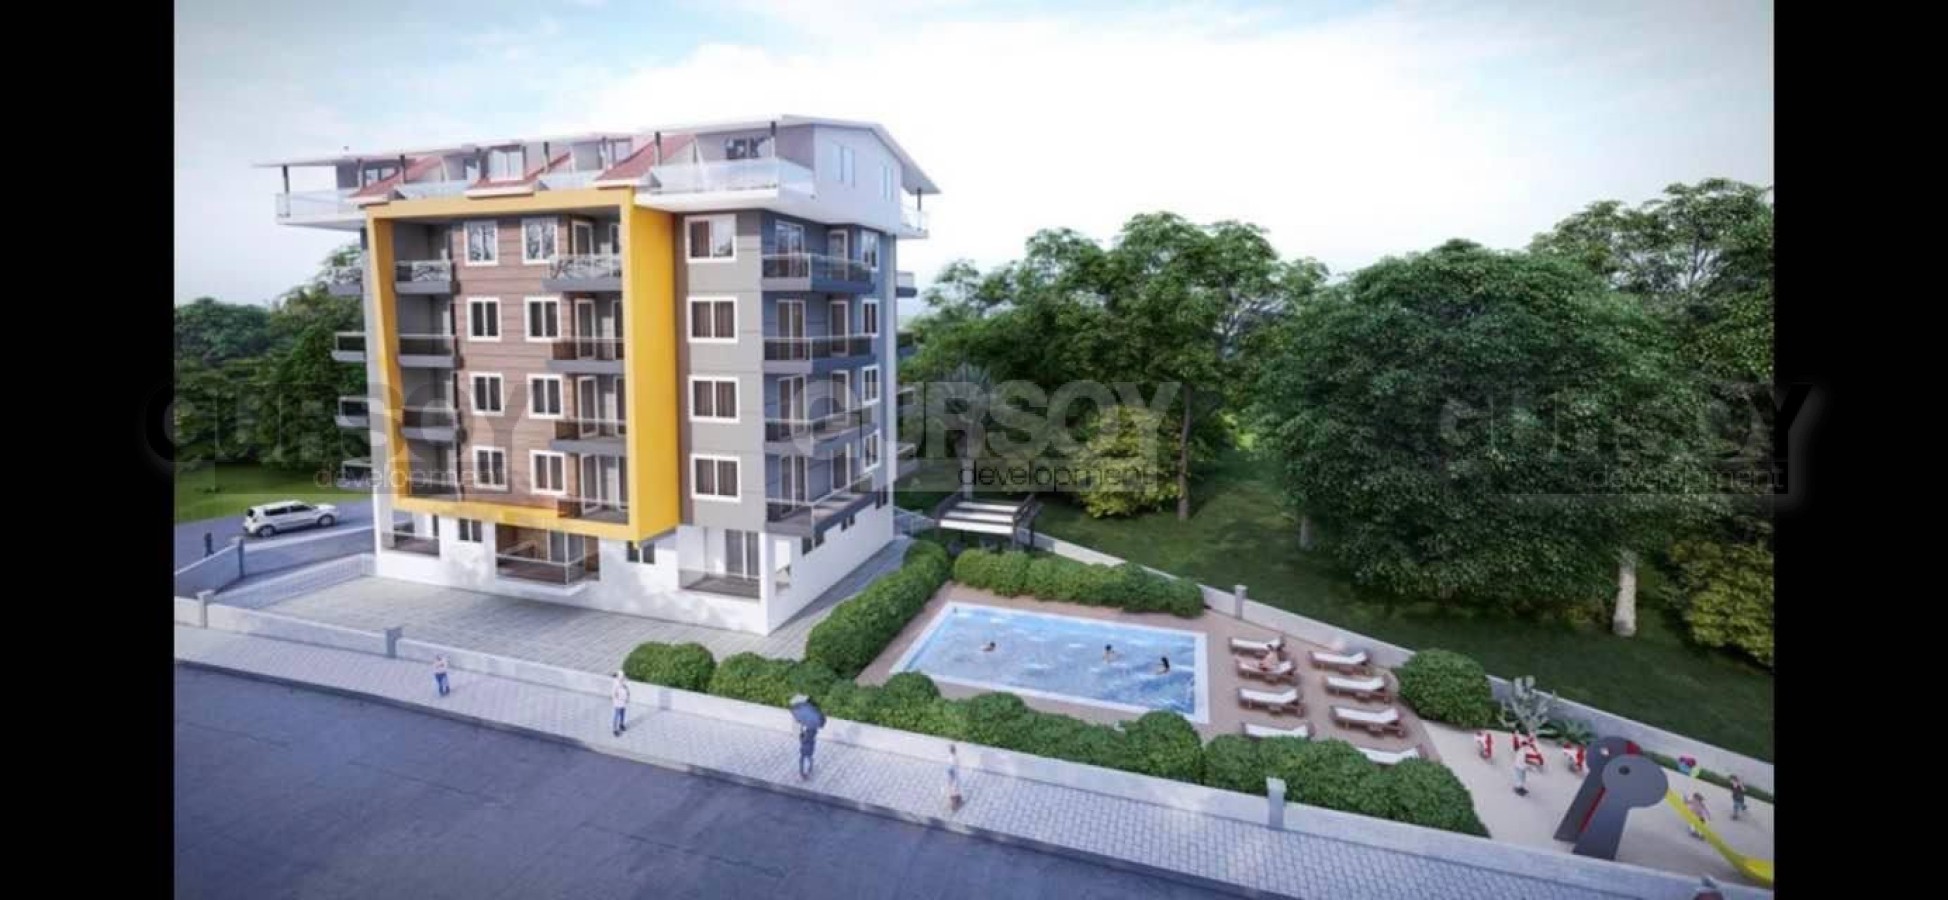 Новая квартира с видом на море в Газипаше. 1+1,65м2 в Турции - фото 1